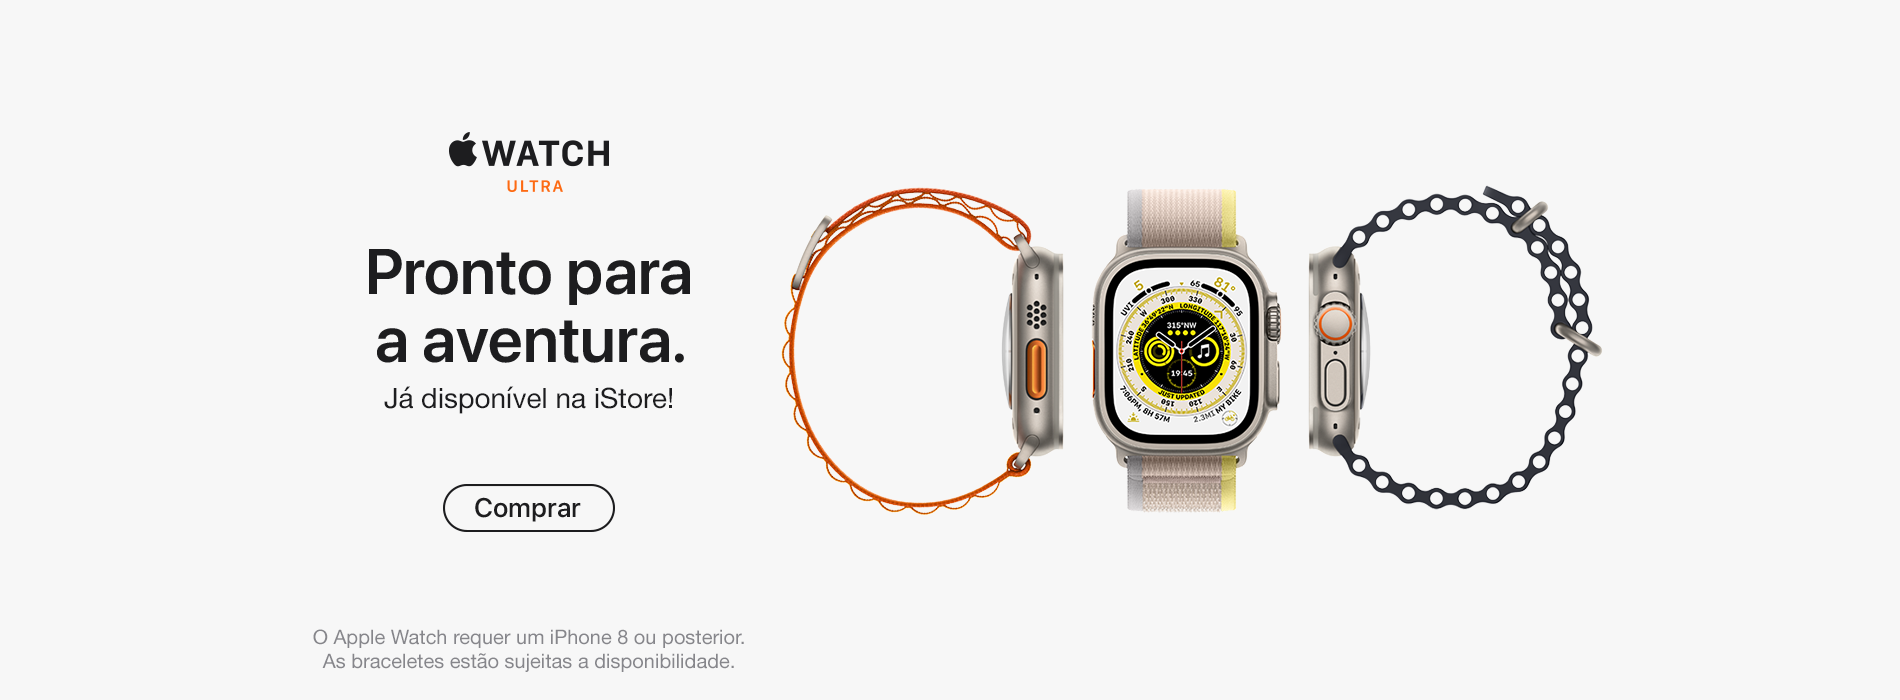 Apple Watch Ultra - Disponível